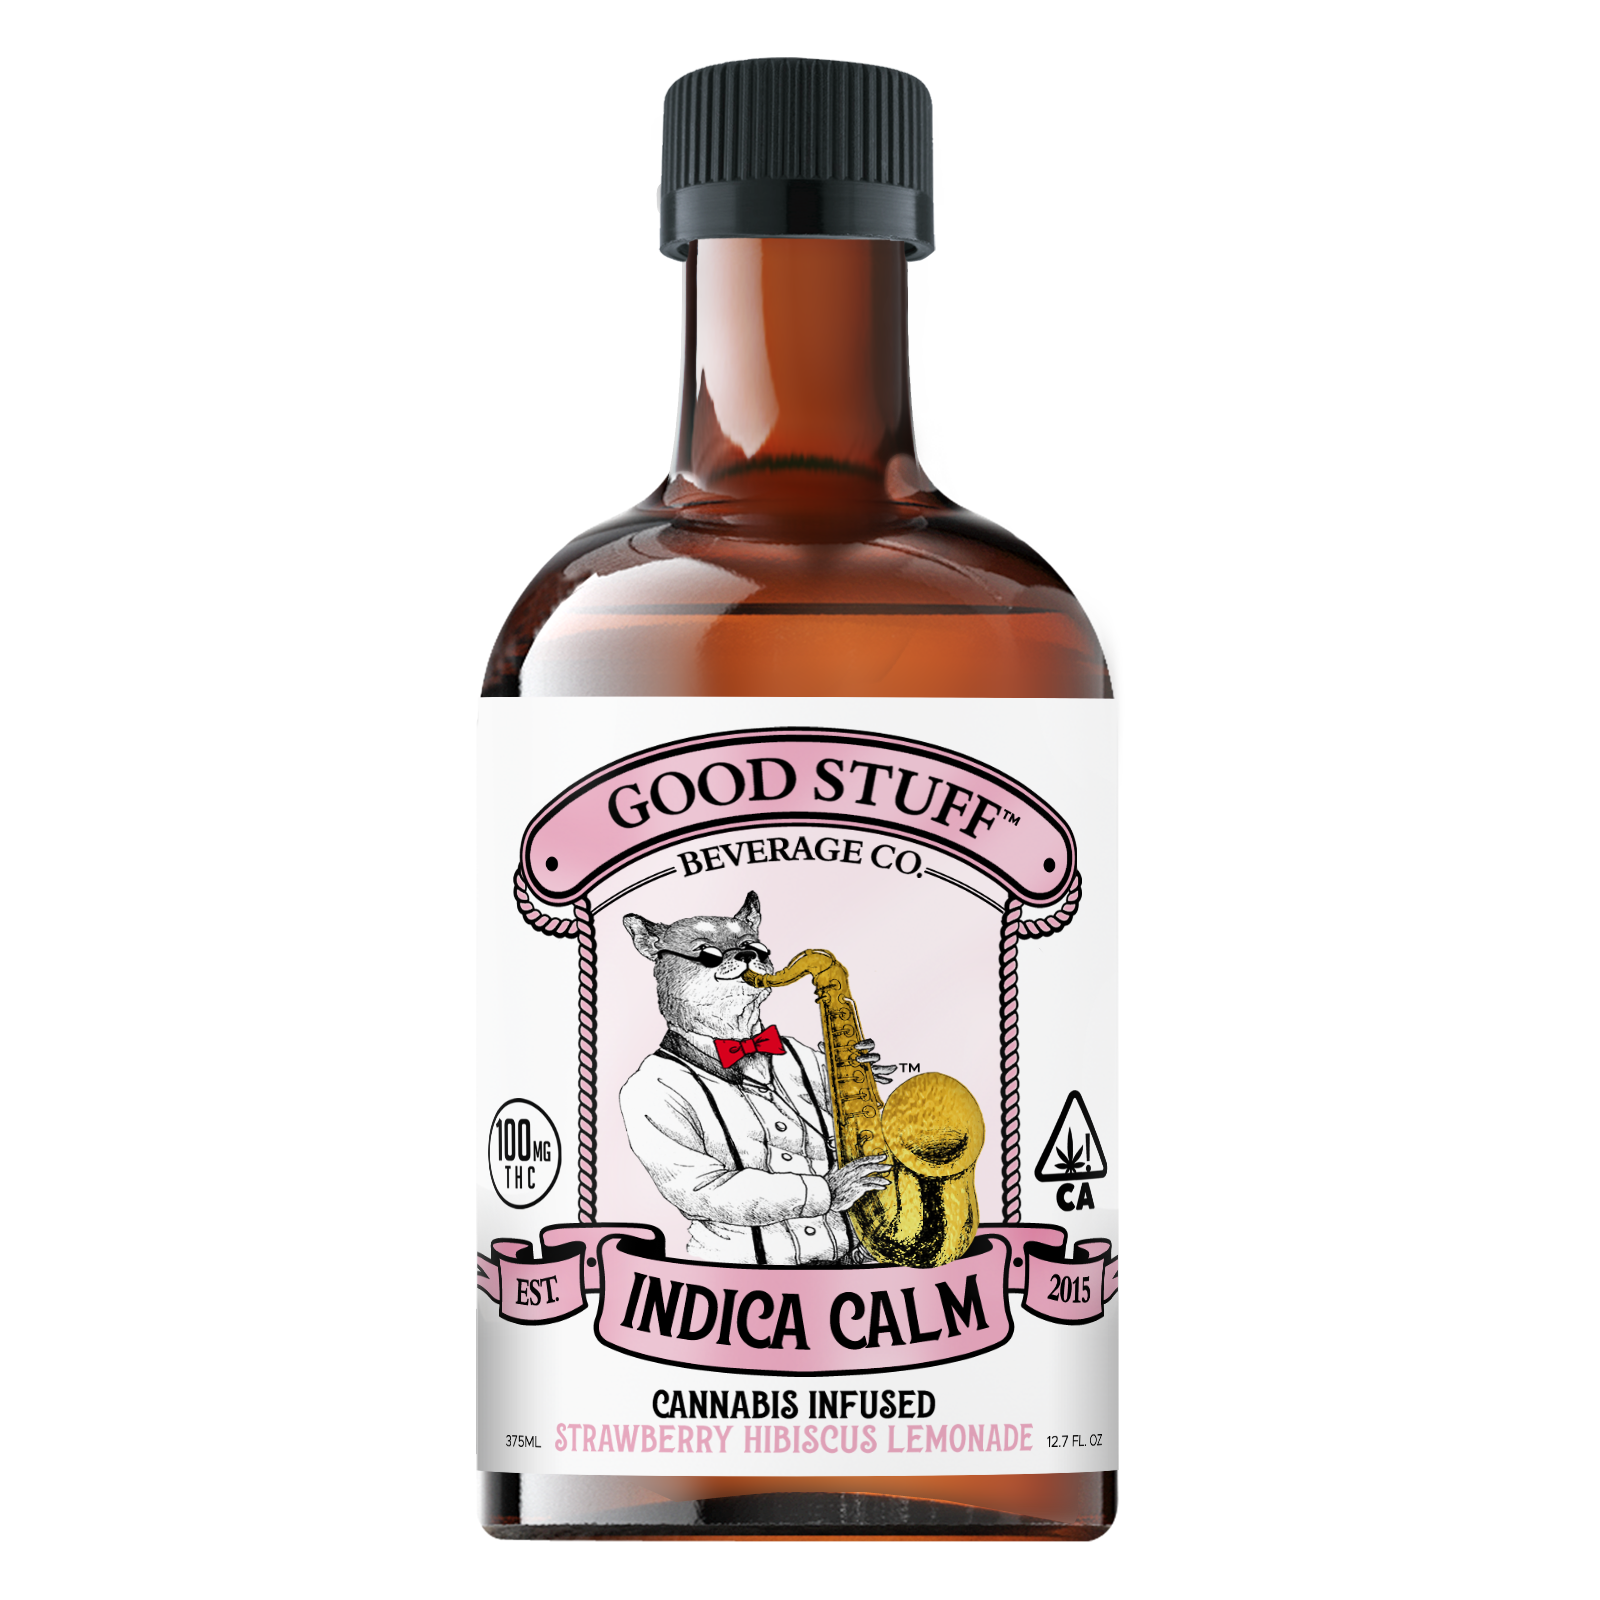 Strawberry Hibiscus Lemonade - Indica Calm - 100MG 12.7oz Bottle